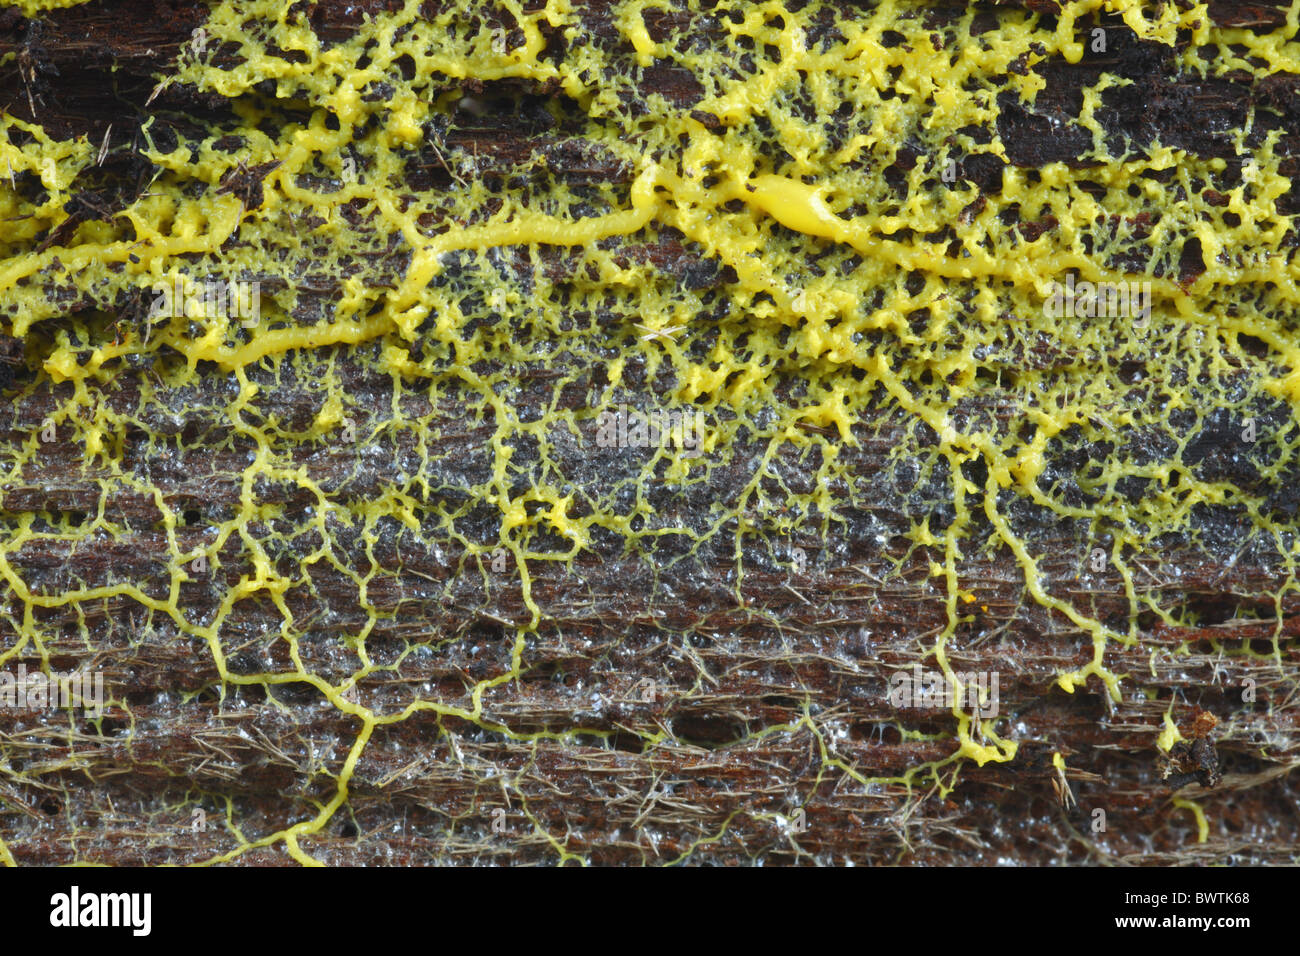 Myxomycetes slime mold fruit fruiting body grassland nature natural wild wildlife environment environmental europe european Stock Photo